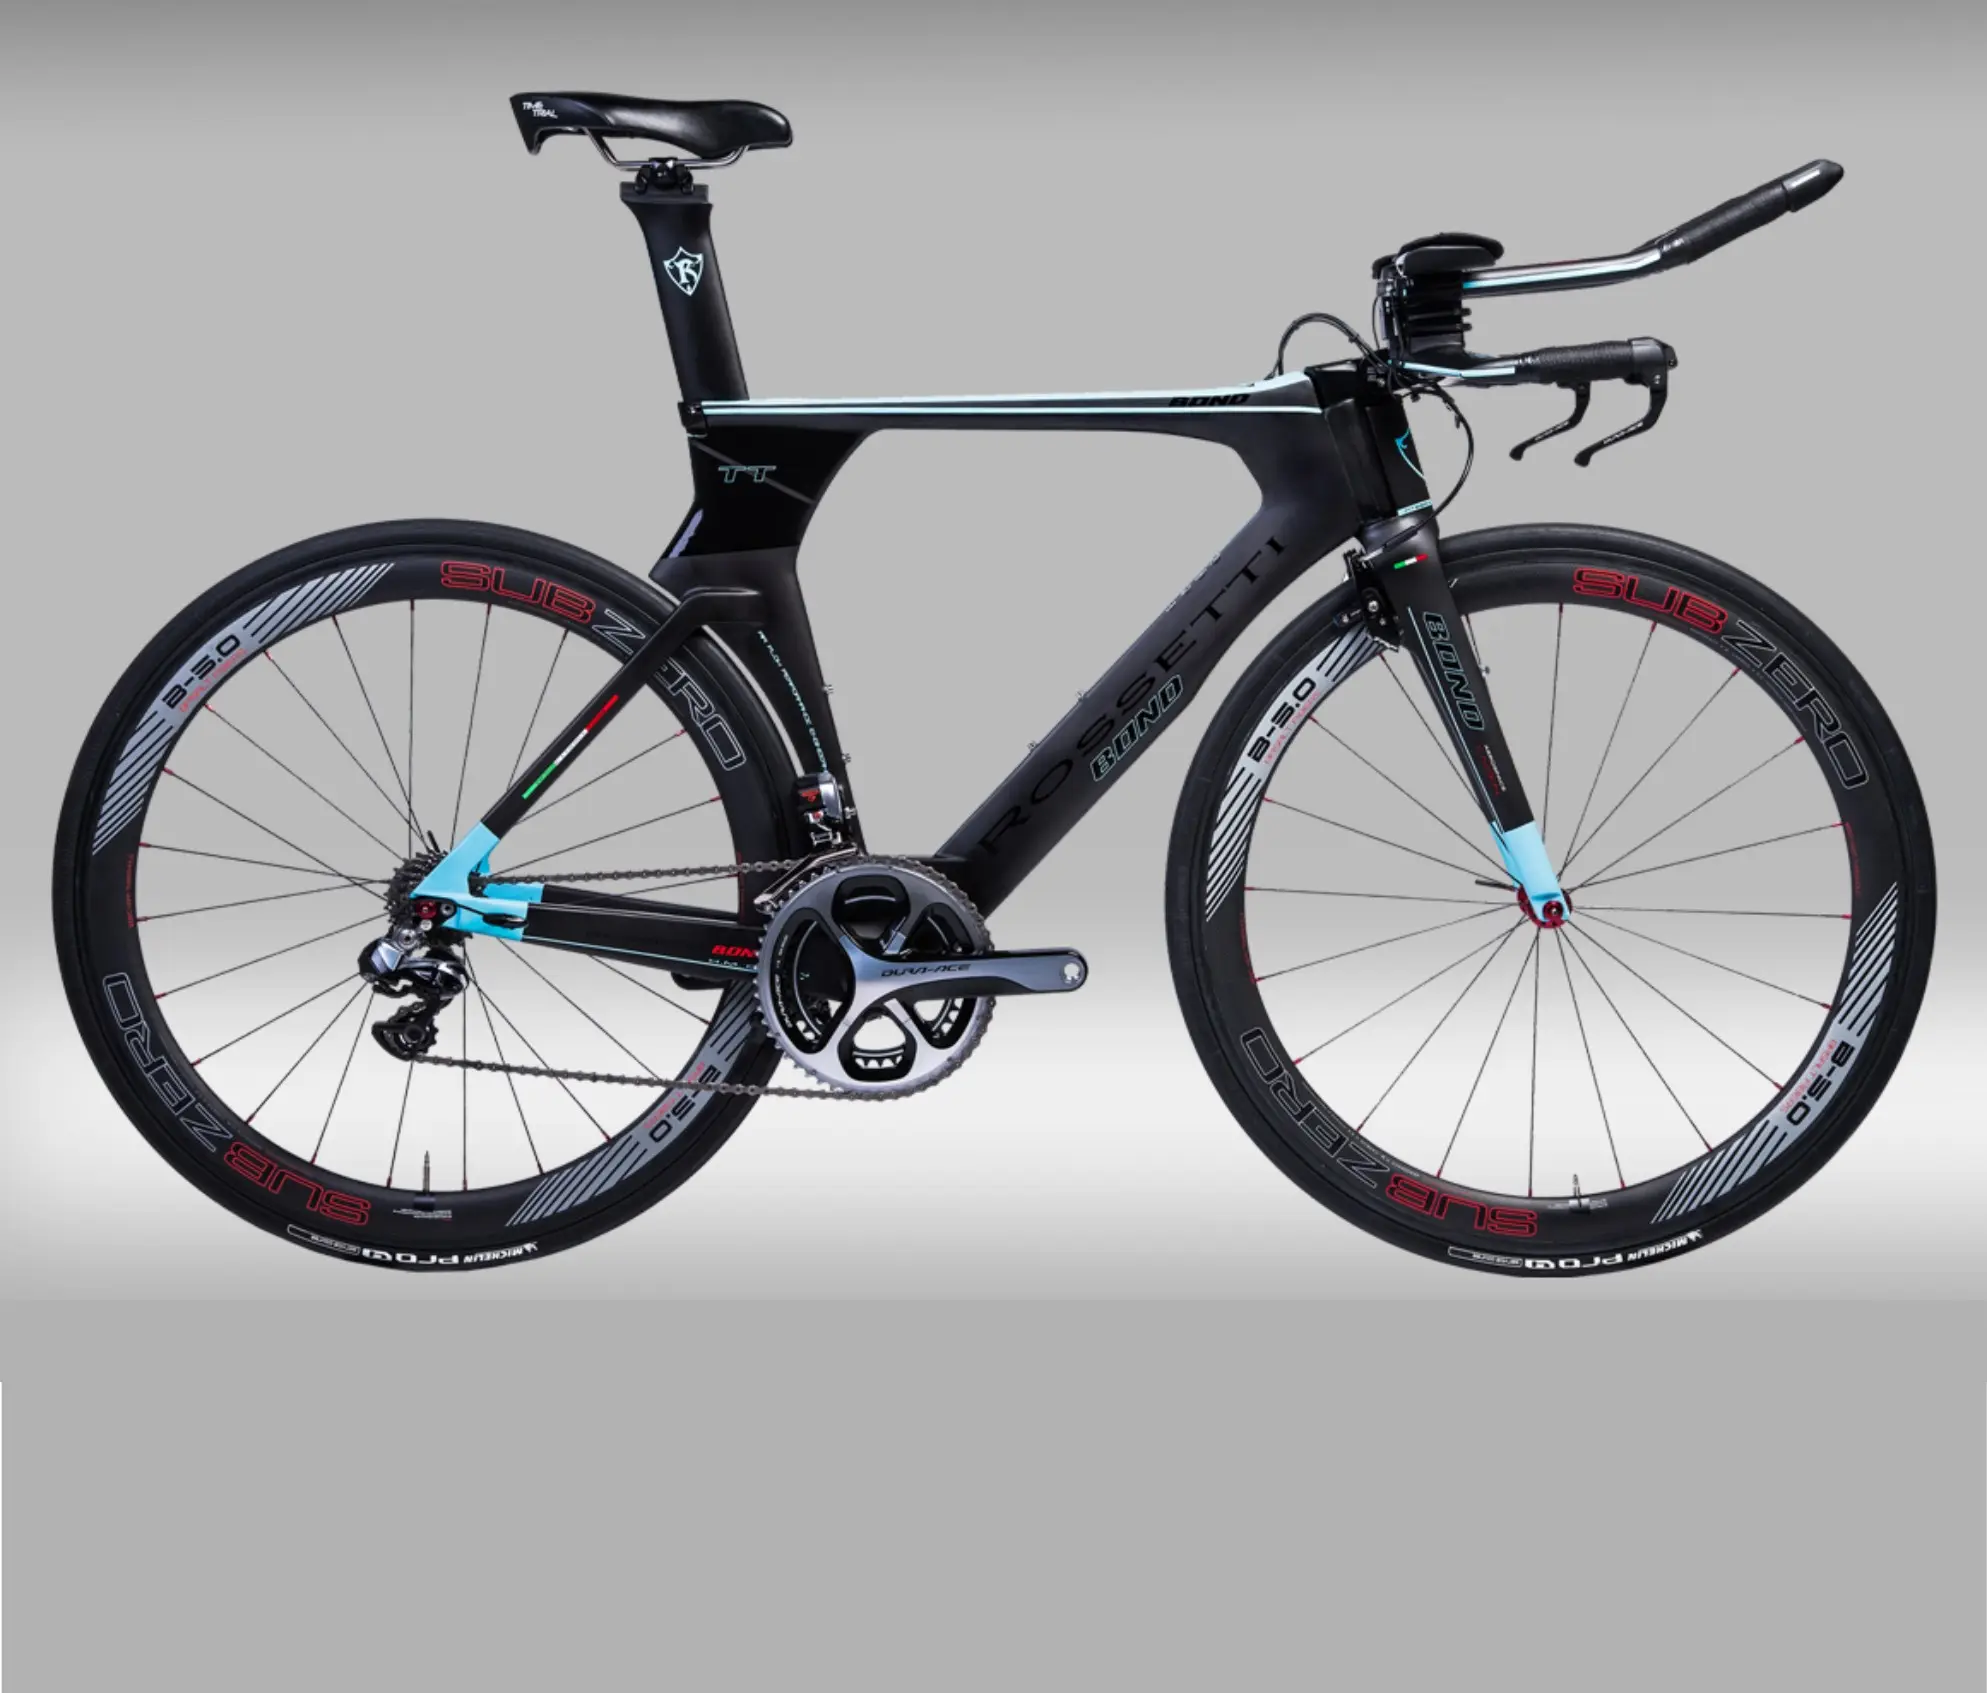 Miracle novo trahlon bicicletas de carbono, conjunto completo de bicicletas tt com tempo de carbono, rodas de carbono, haste ajustável 2021